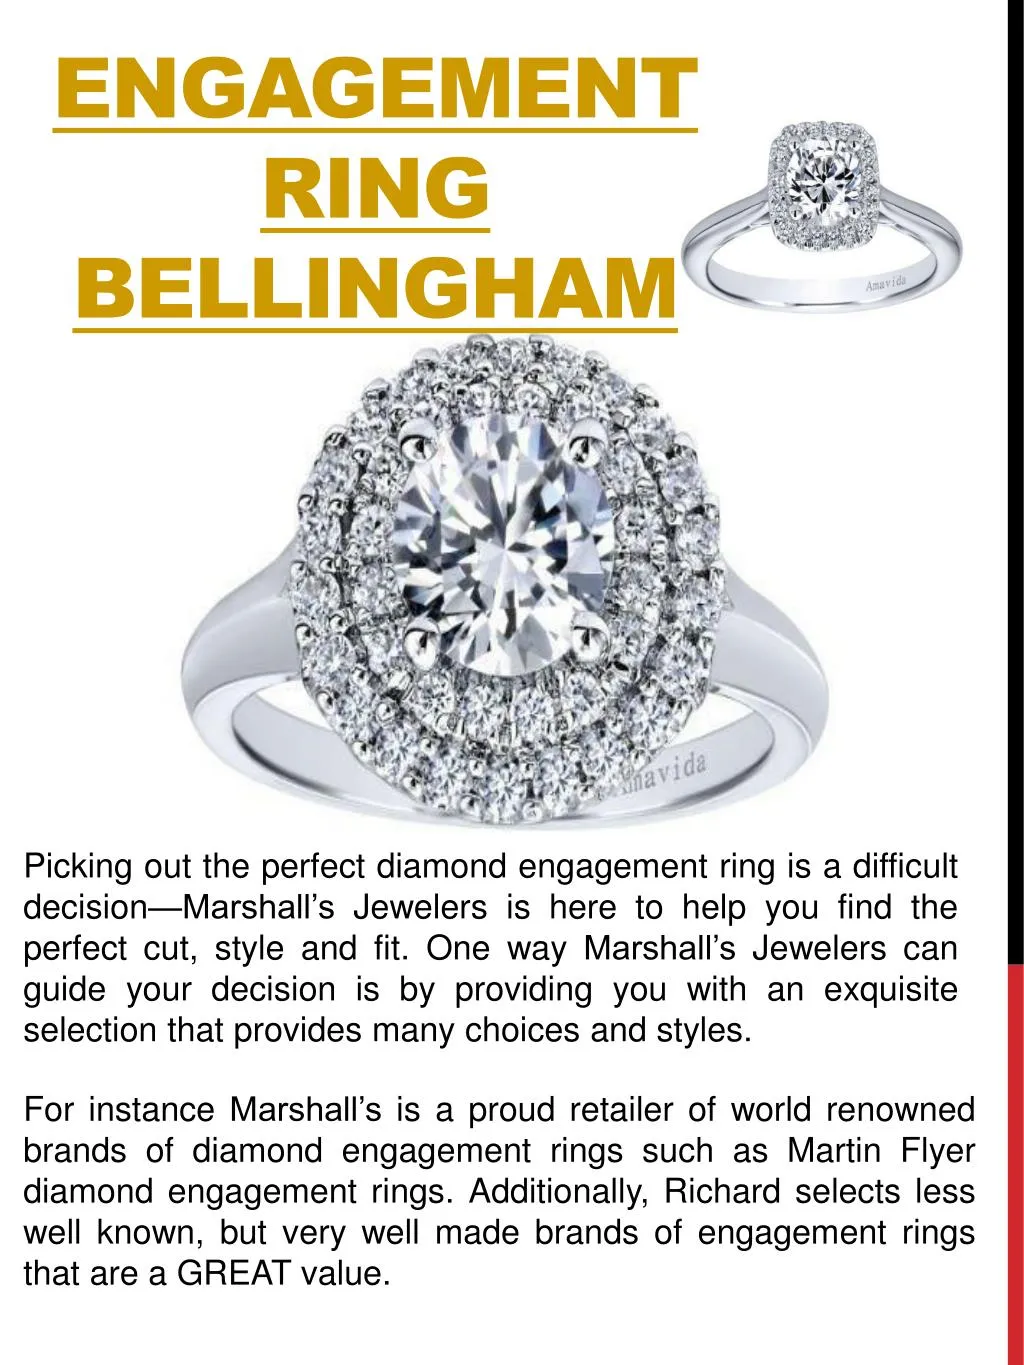 engagement ring bellingham